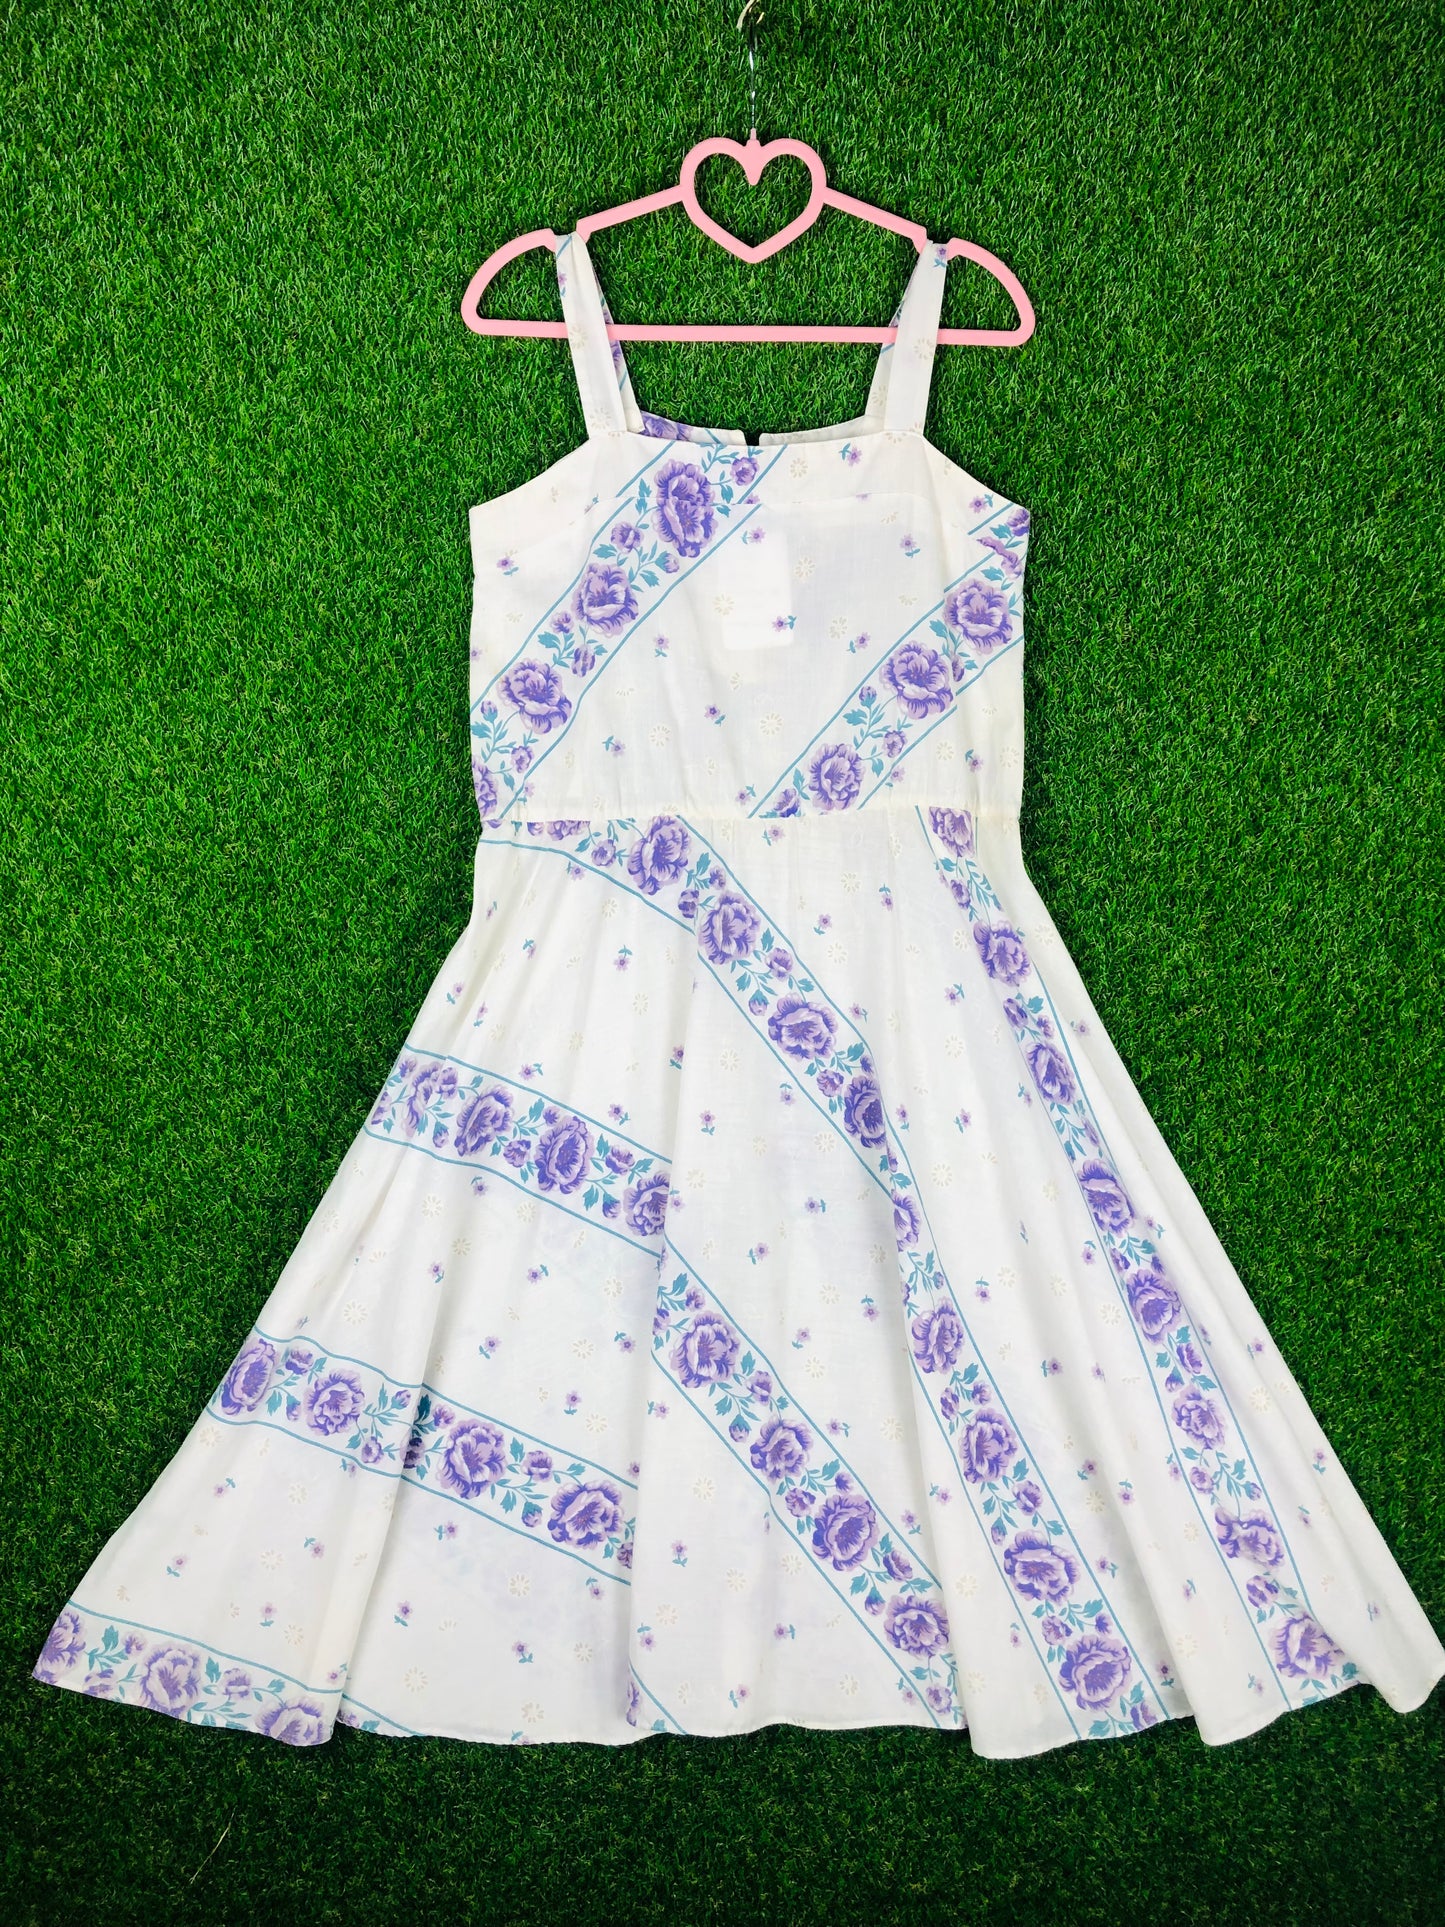 1980's Romantic Volup Dress With Purple Flowers